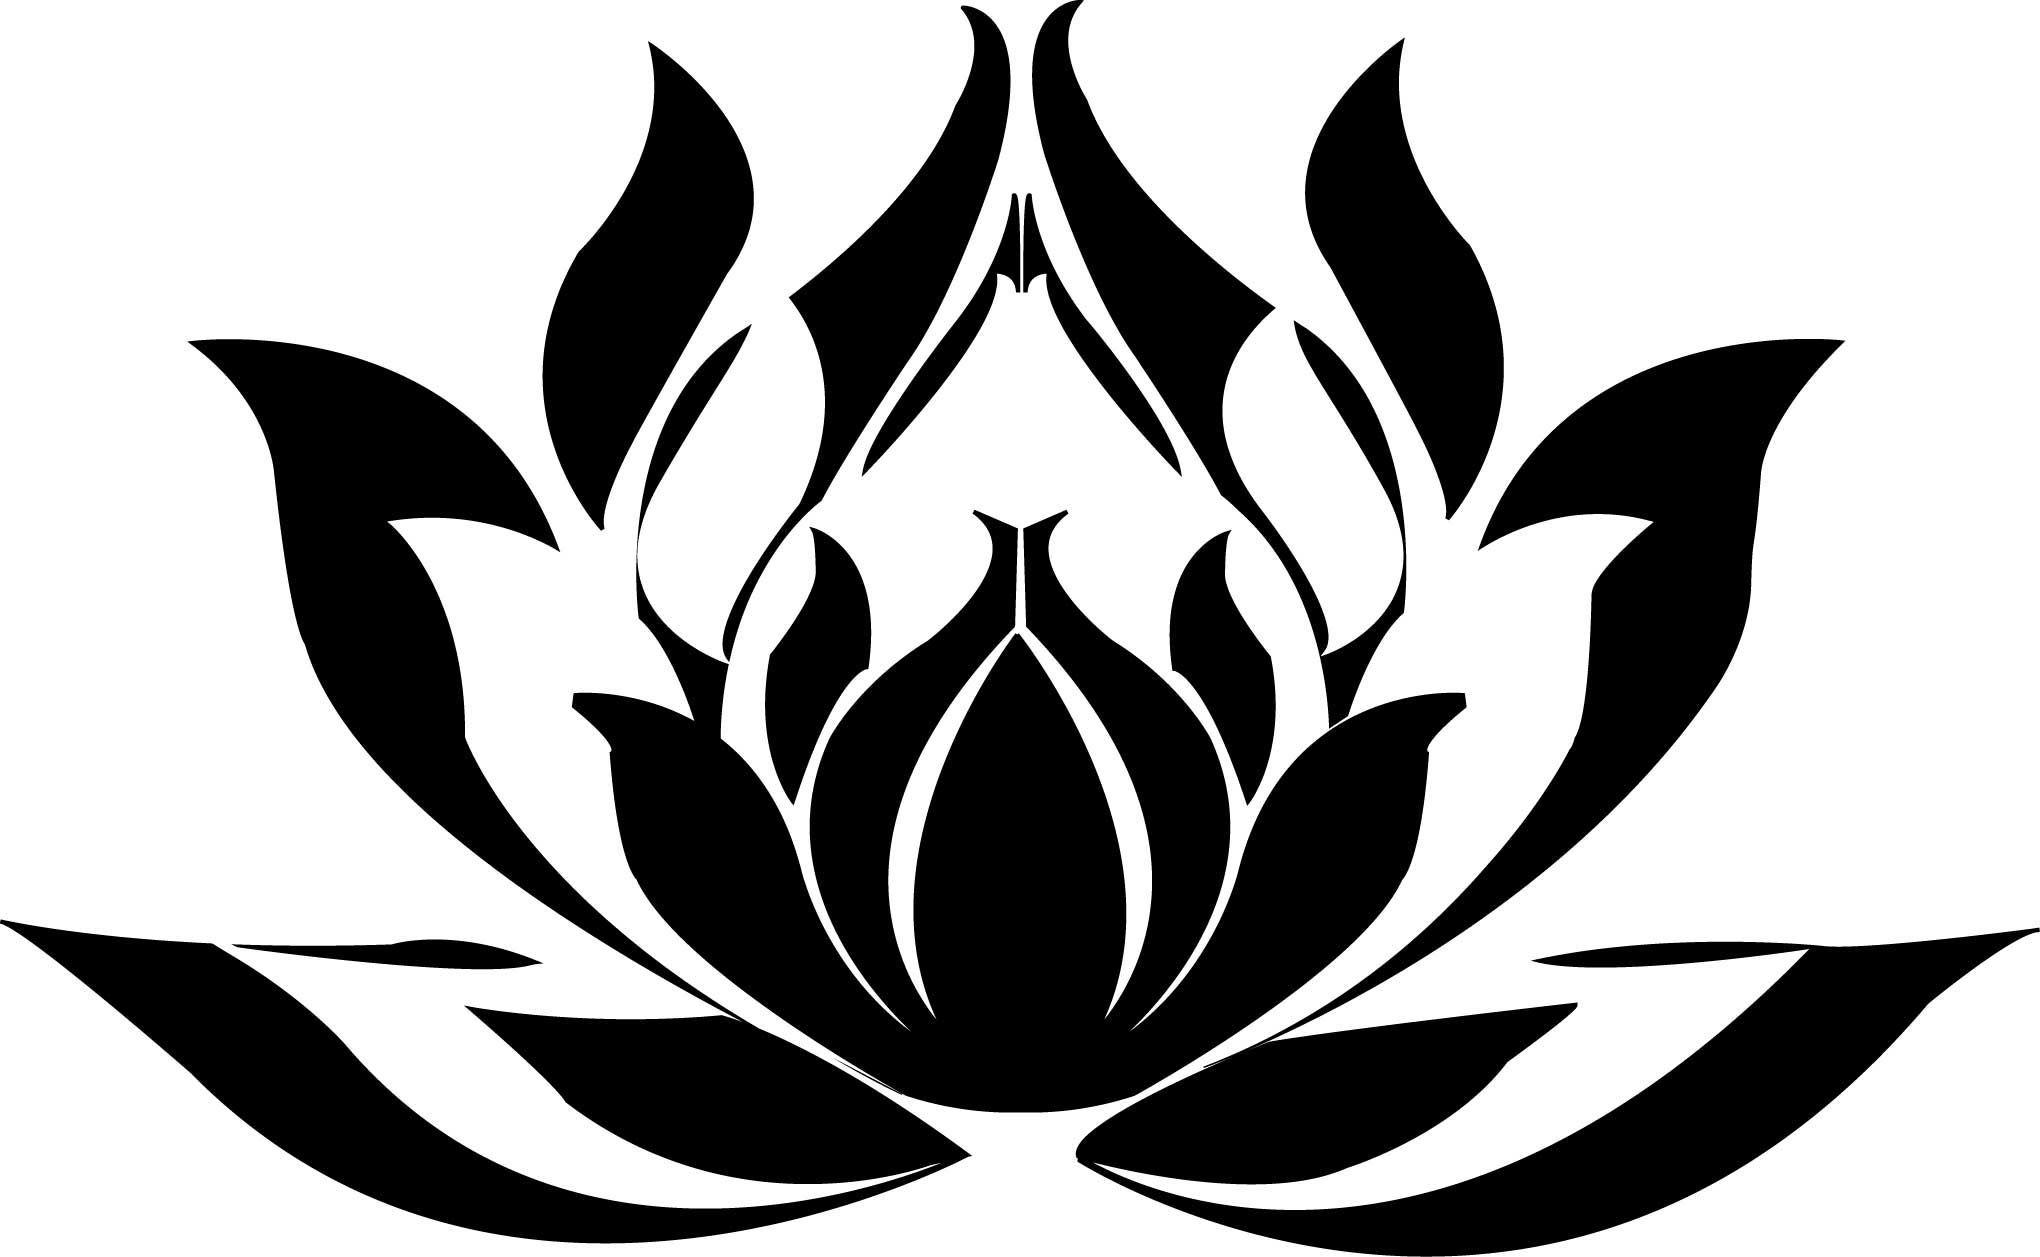 Black Lotus Flower Logo - Black And White Lotus Flower Drawings | MyFlowerReviews | My ...